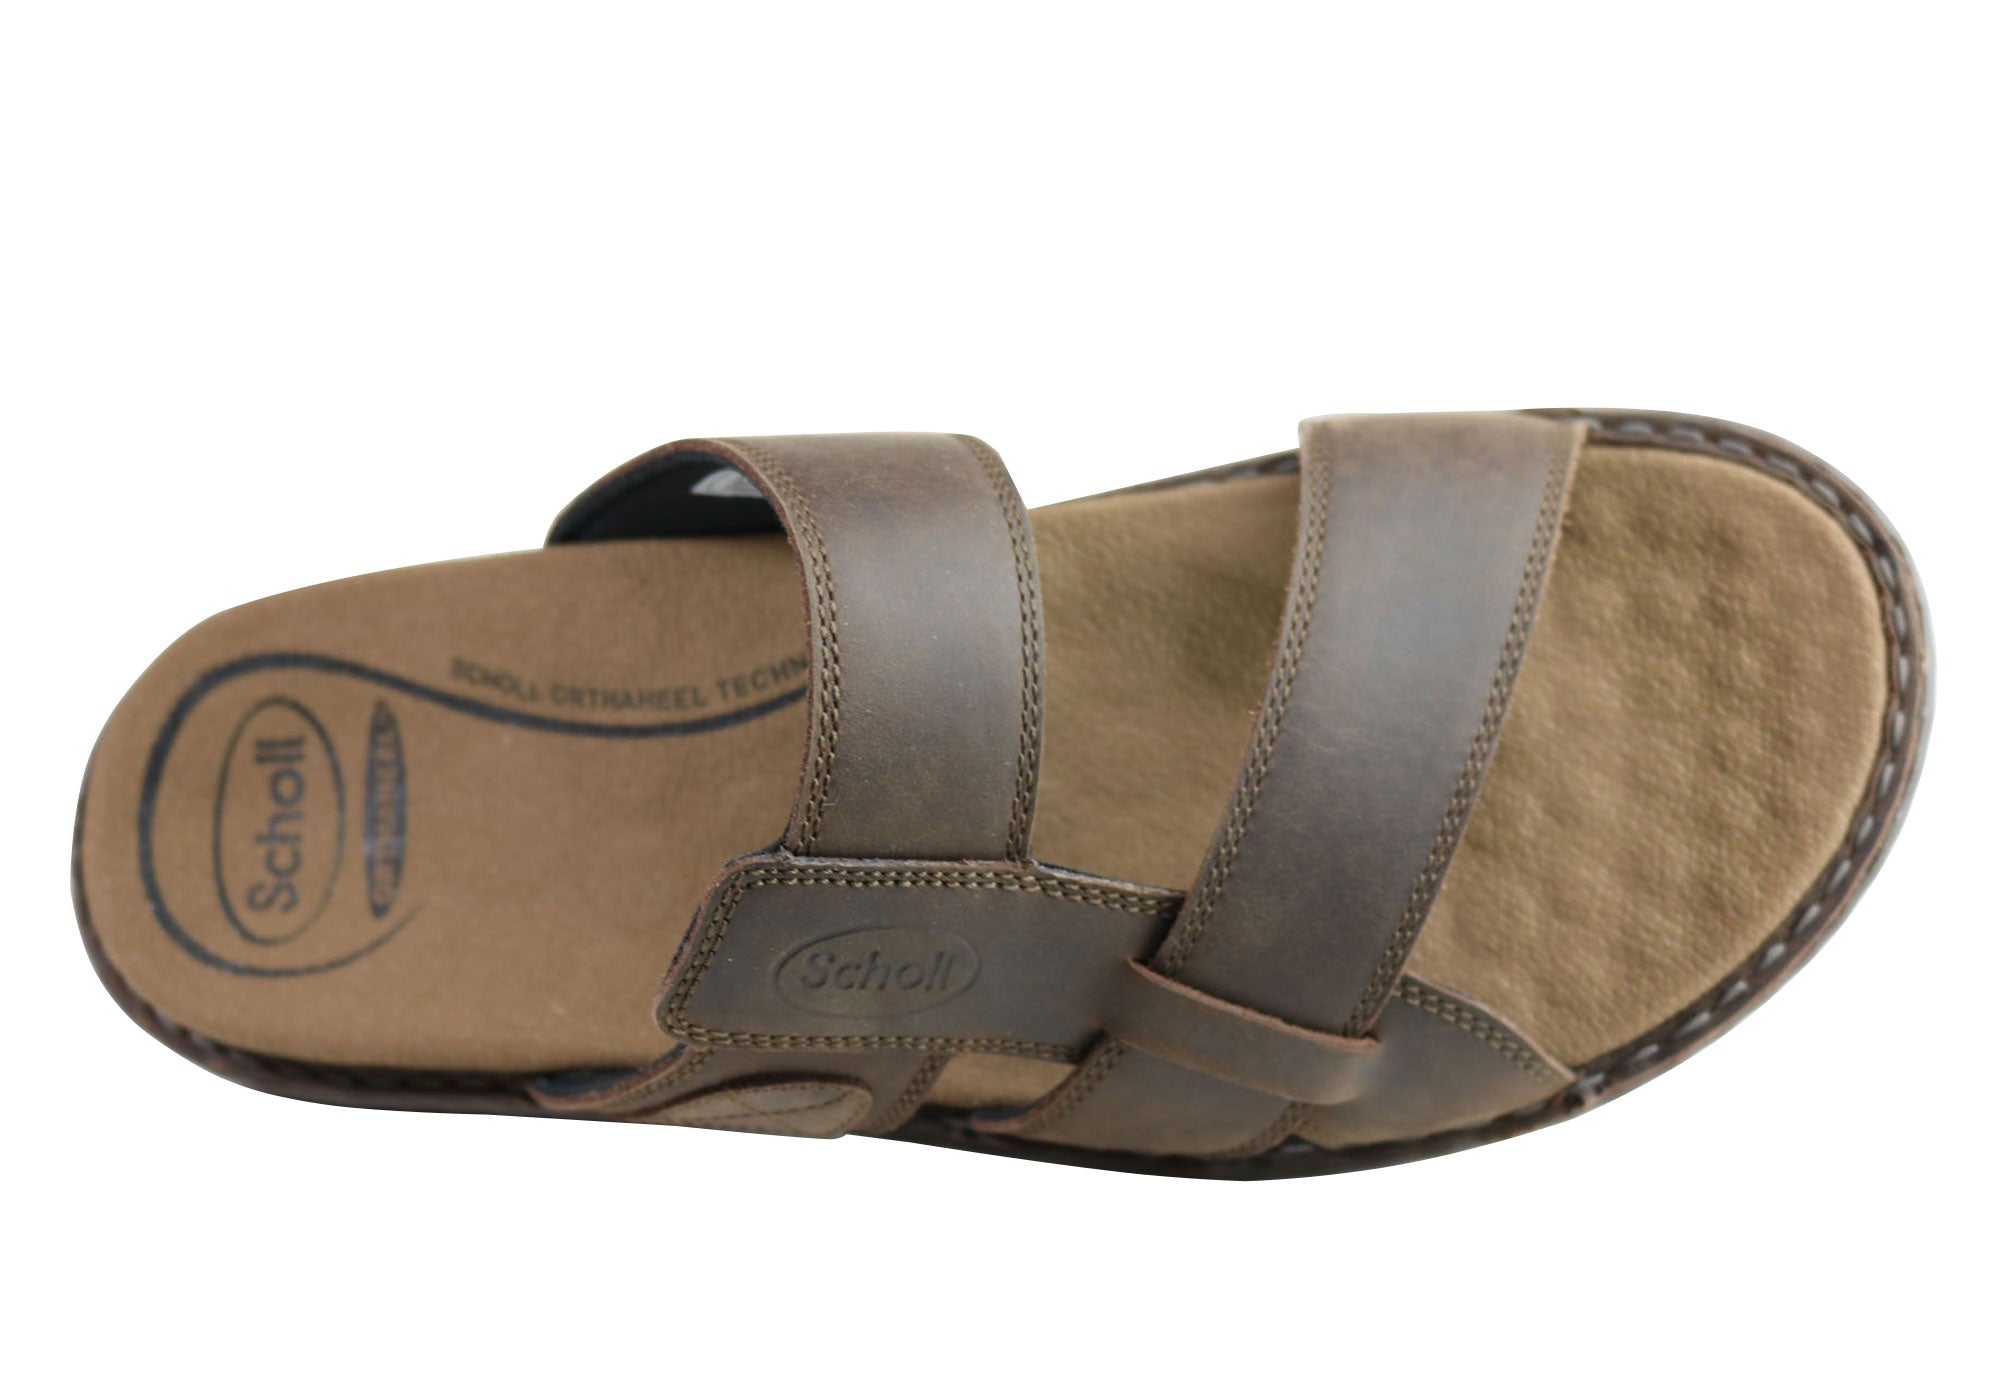 Scholl Orthaheel Rafa Mens Comfortable Supportive Slide Sandals | Brand ...